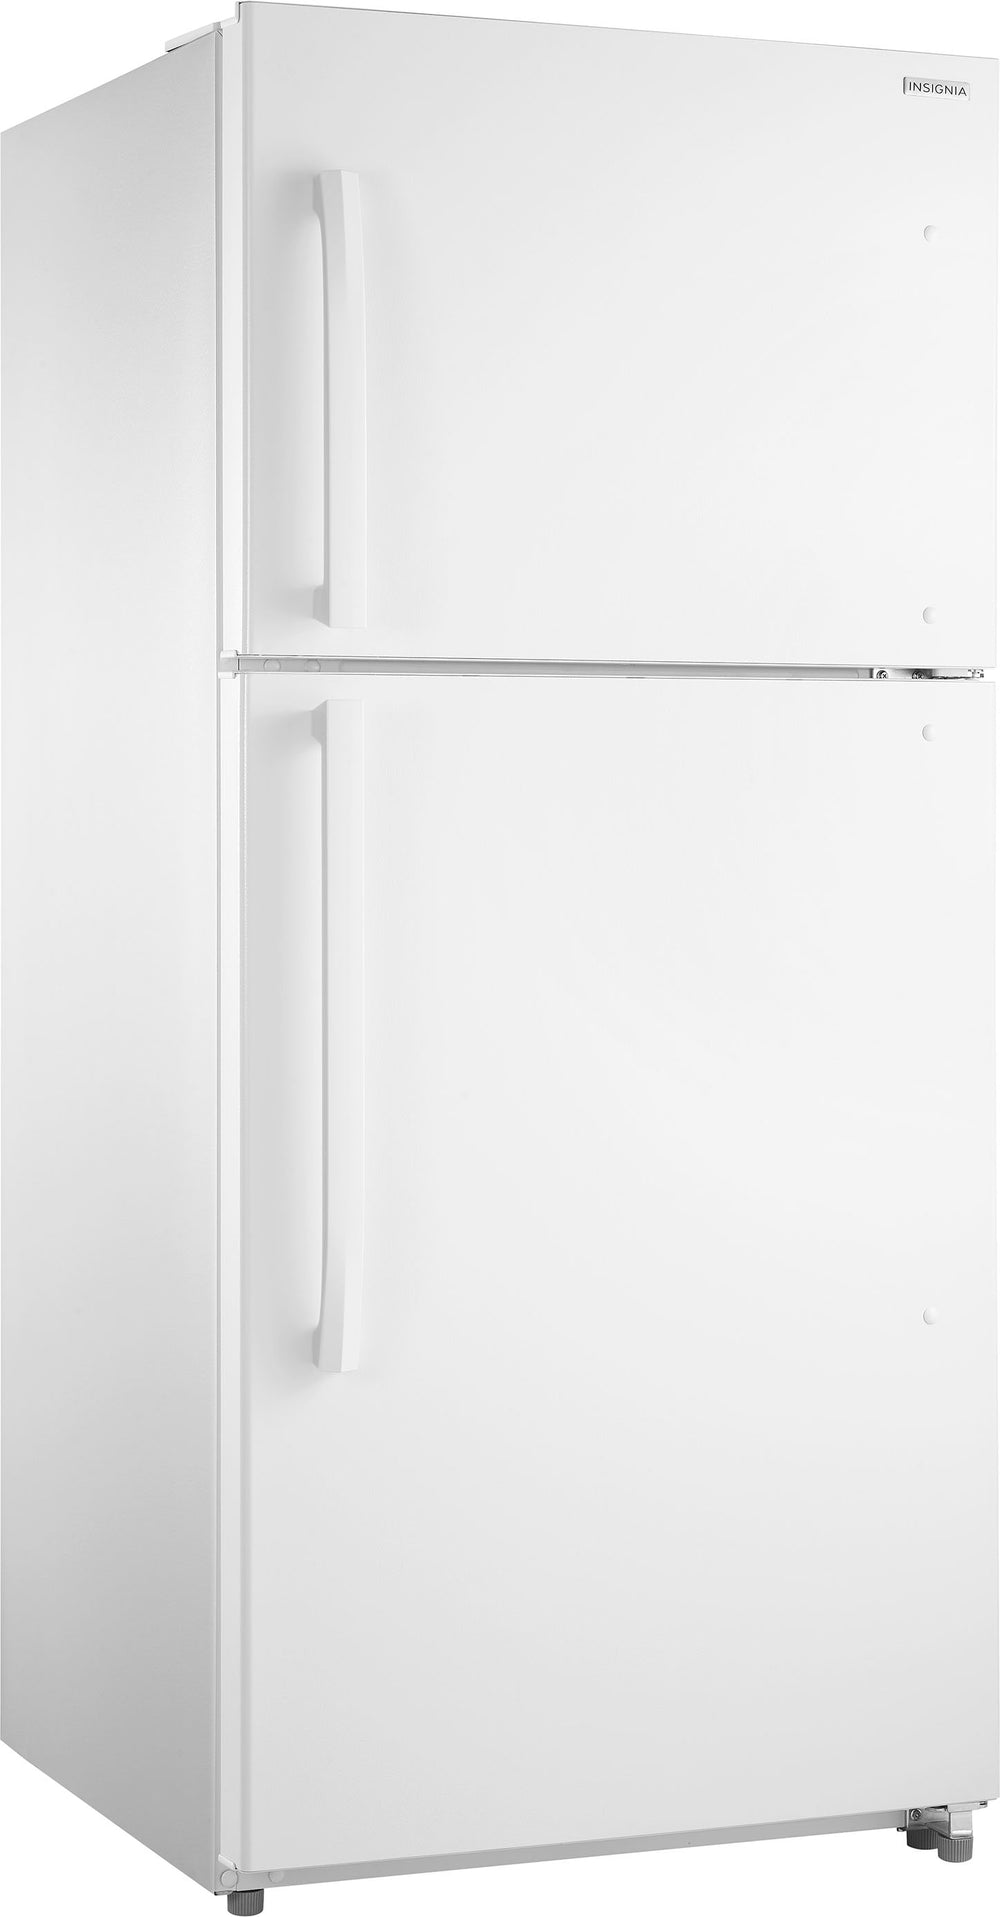 Insignia™ - 18 Cu. Ft. Top-Freezer Refrigerator - White_1